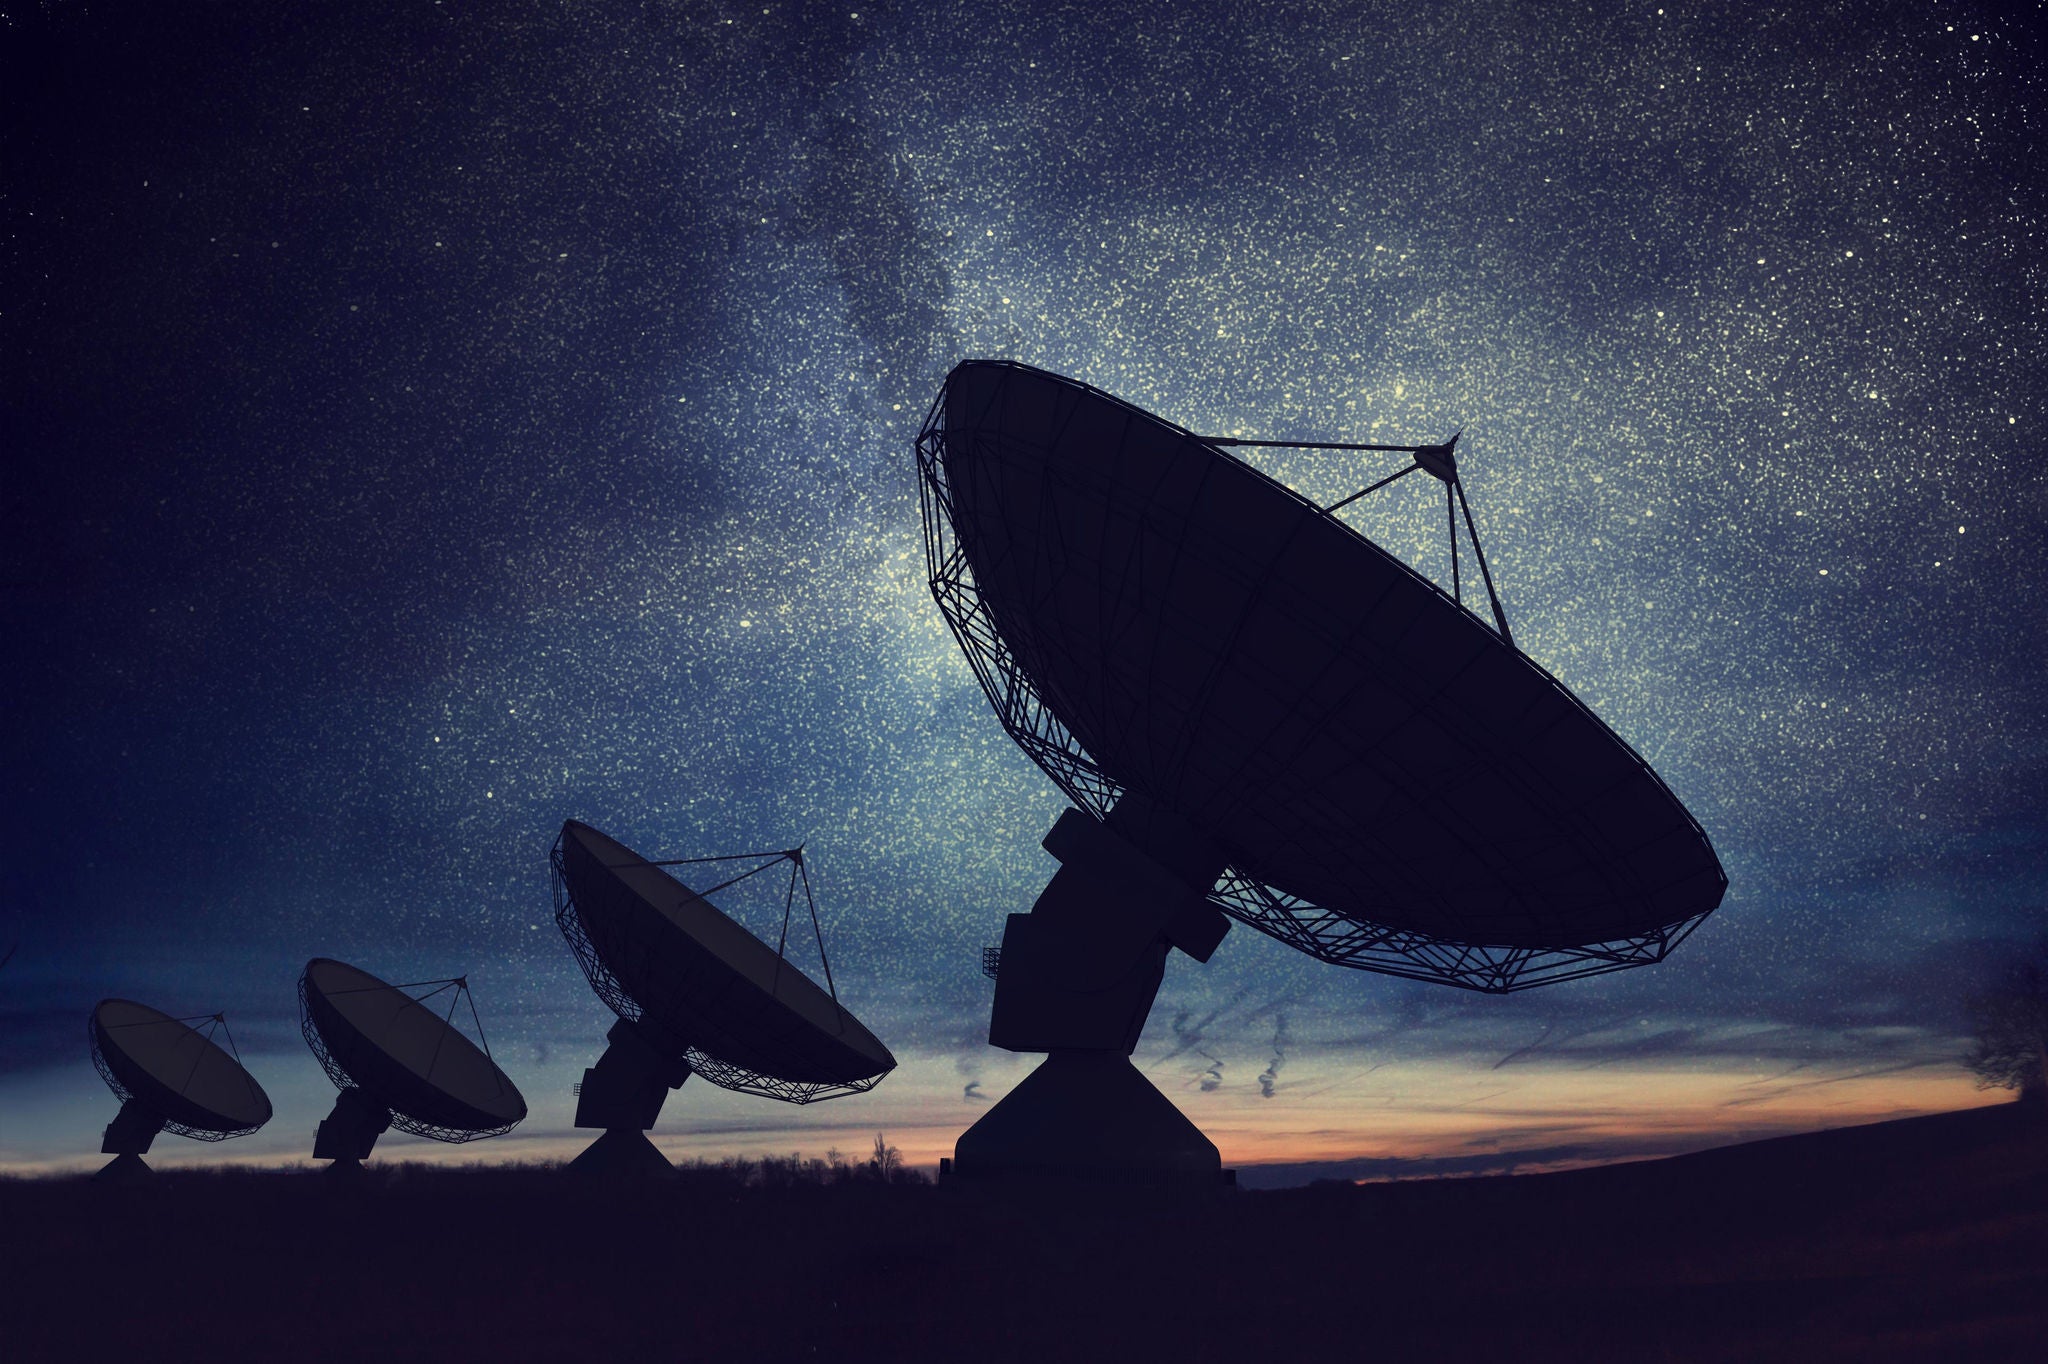 Satellite dishes or radio antennas against night sky 